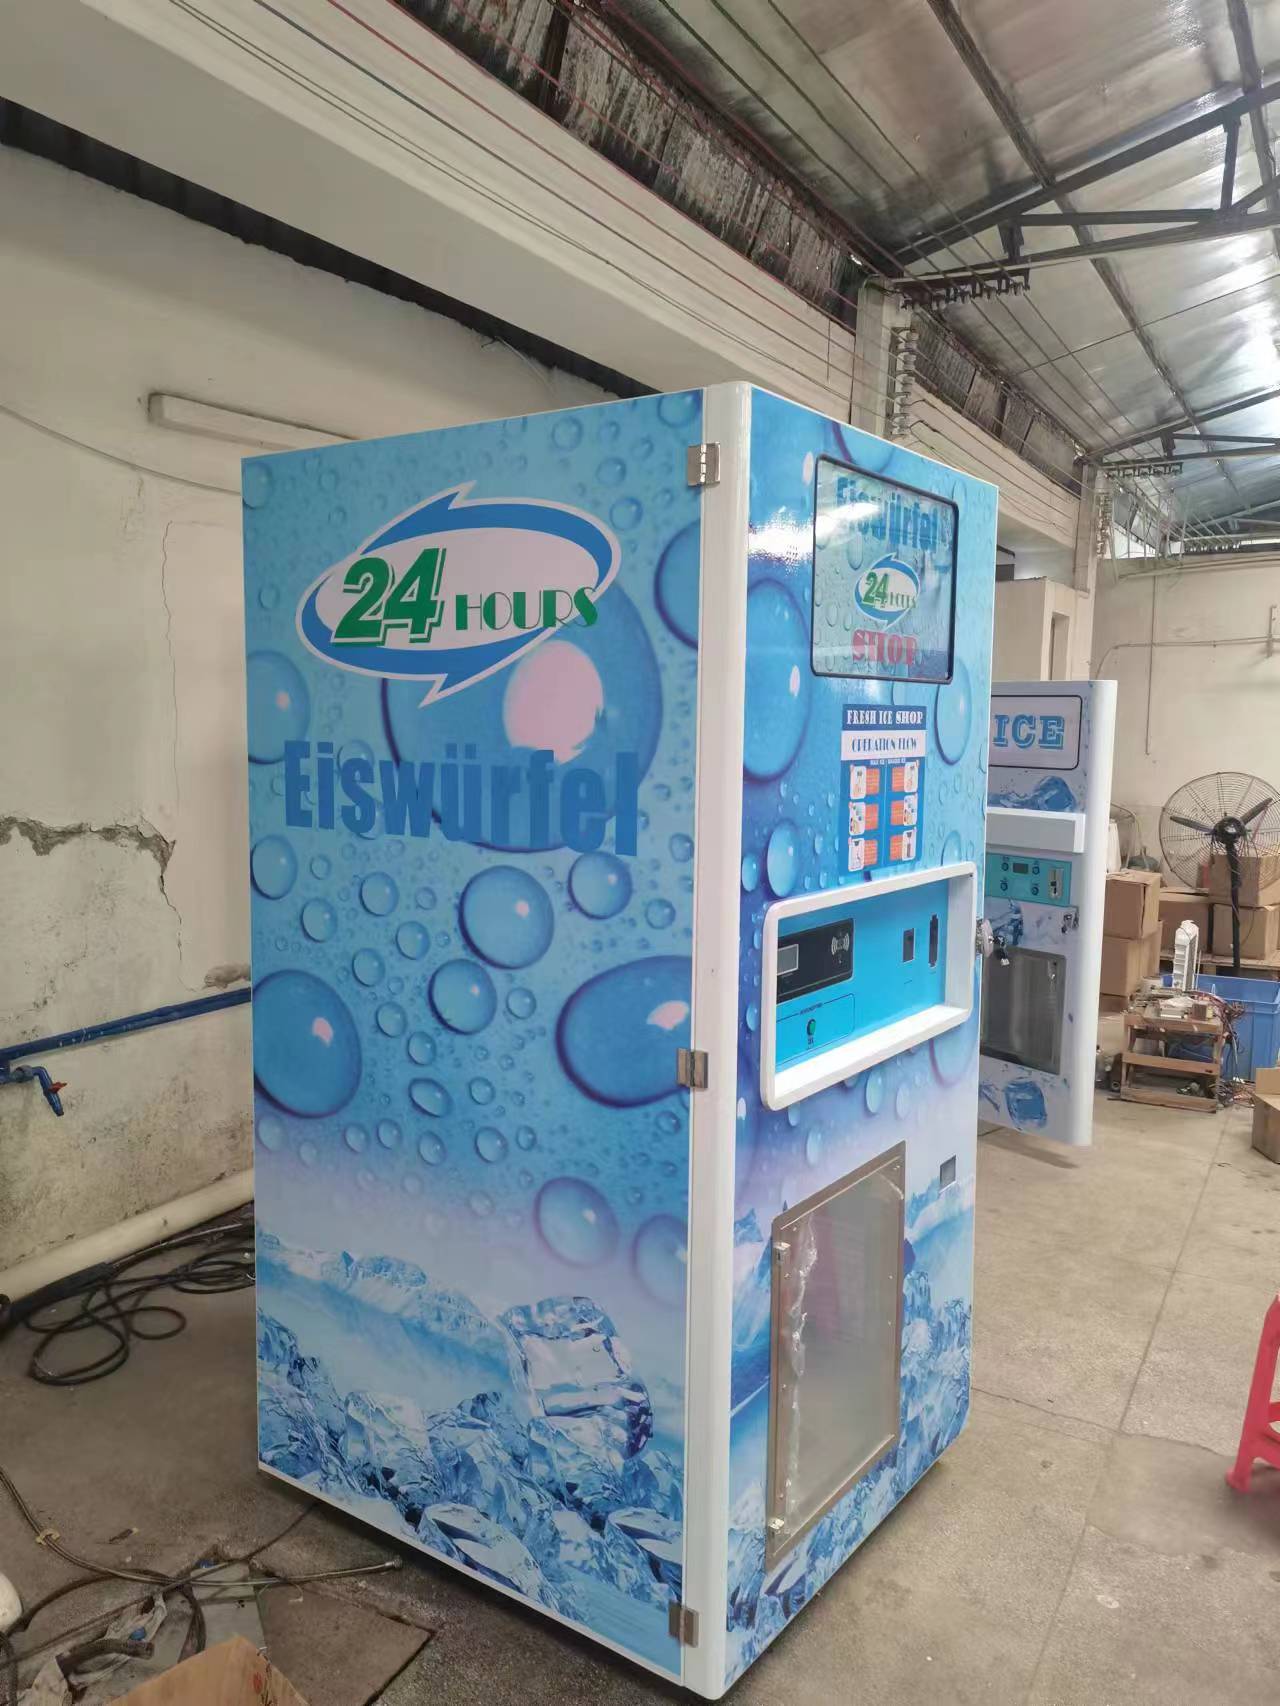 ice vending machine